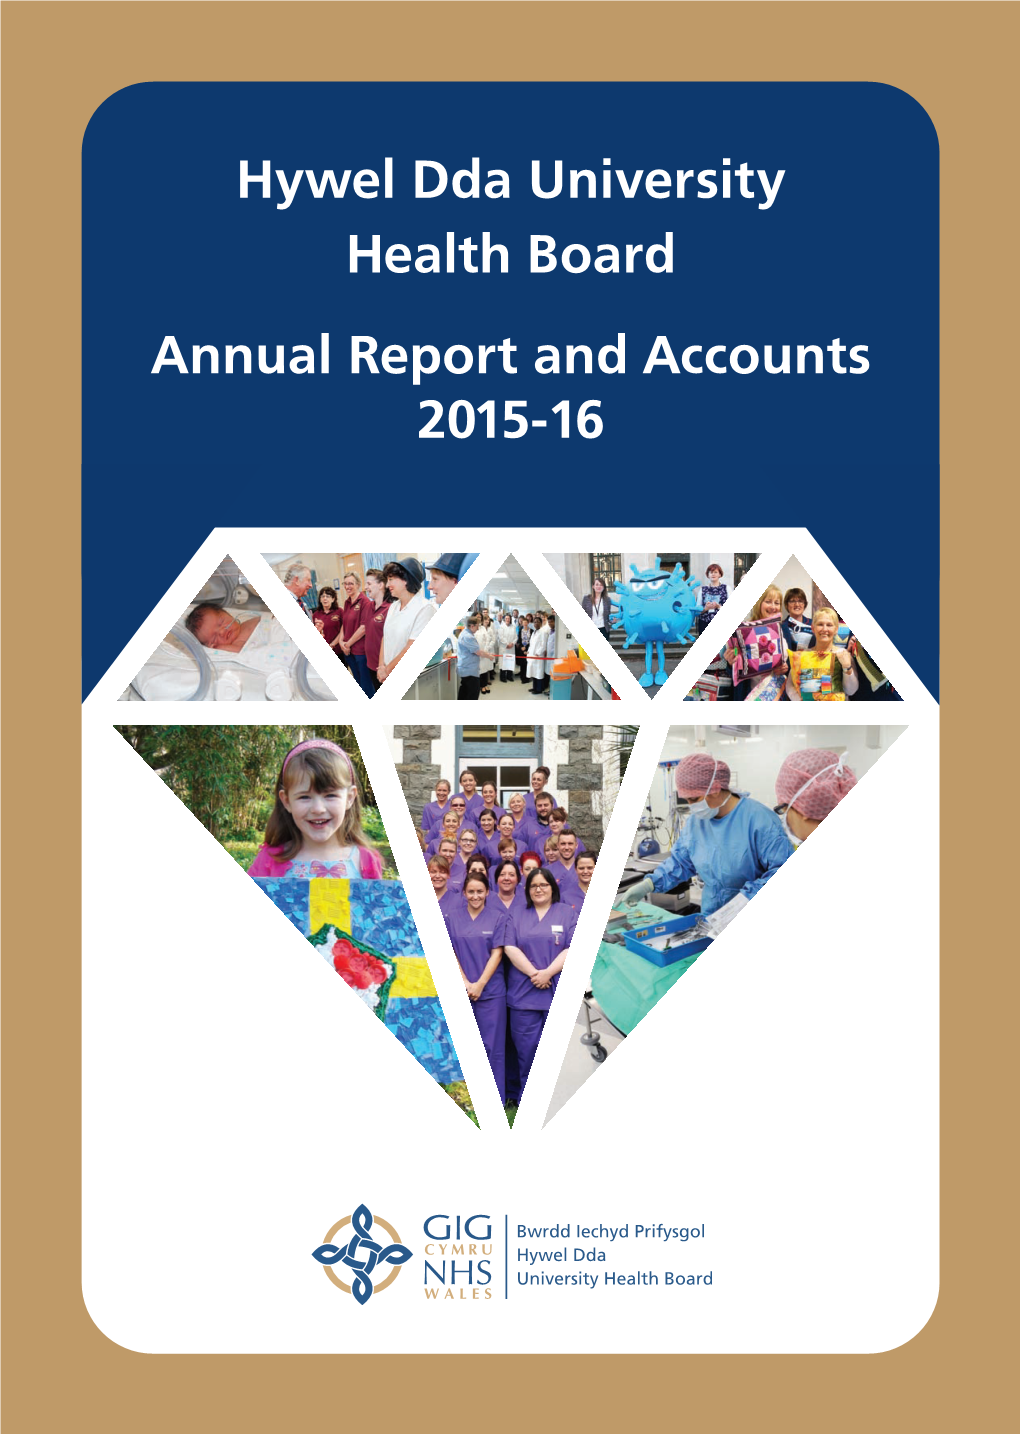 Hywel Dda University Health Board Annual Report and Accounts 2015-16